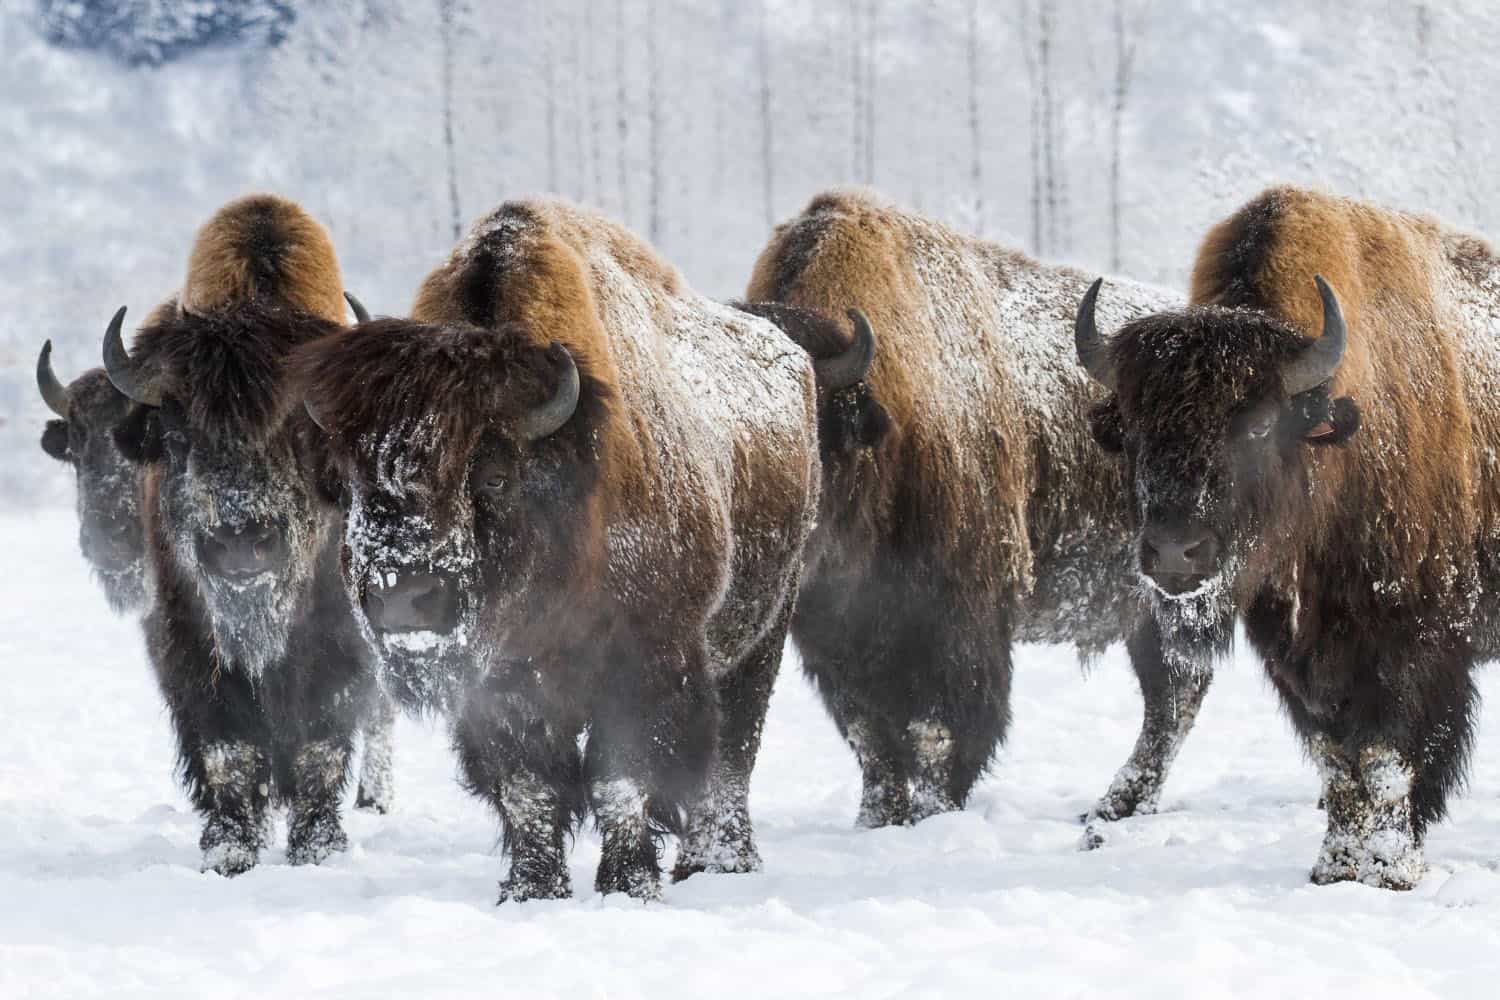 Several bison walk through the snow